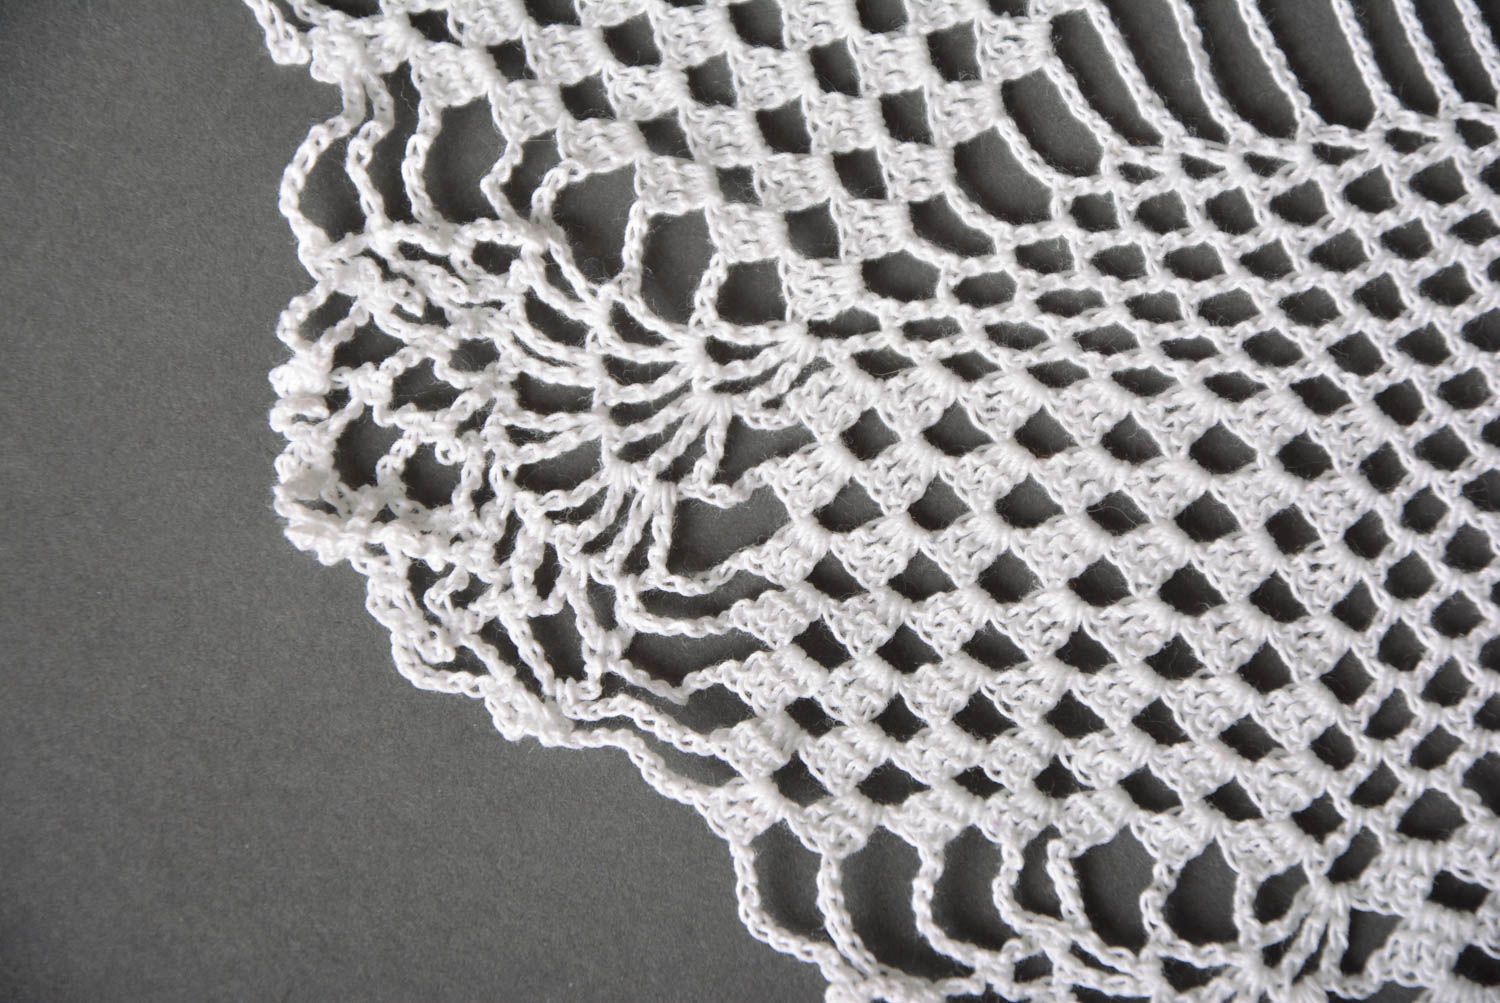 Servilleta tejida a crochet artesanal elemento decorativo diseño de casa foto 2